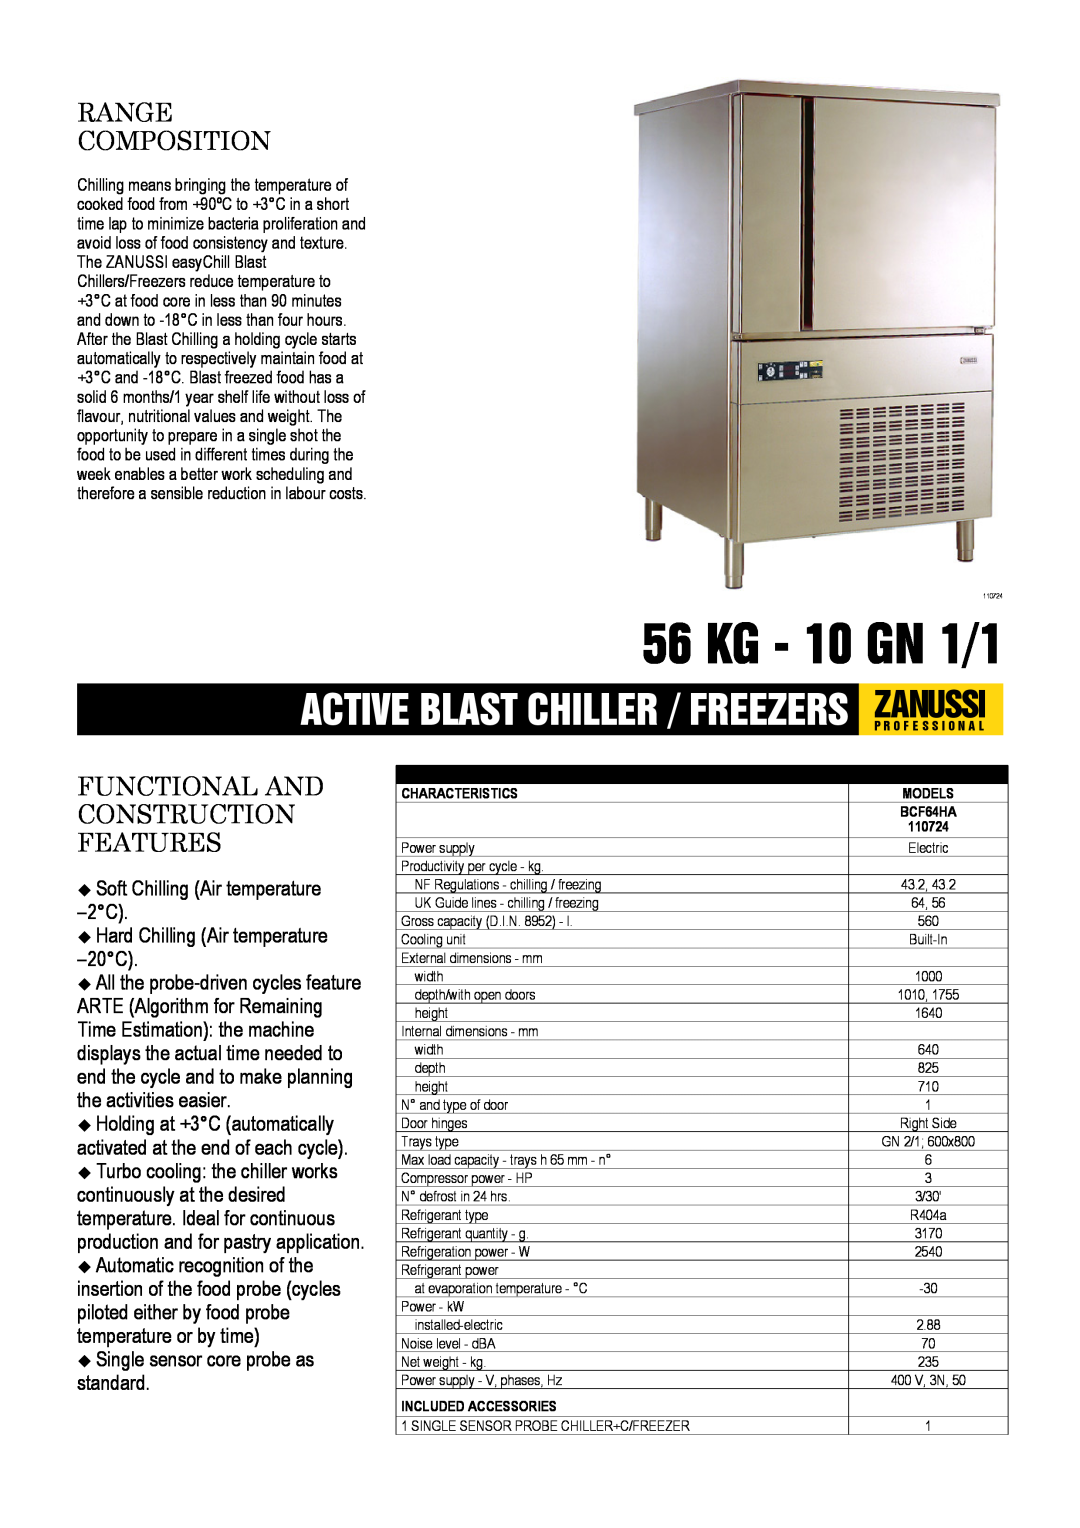 Electrolux 110724, BCF64HA dimensions KG - 10 GN 1/1, Active Blast Chiller / Freezers Zanussip R O F E S S I O N A L 